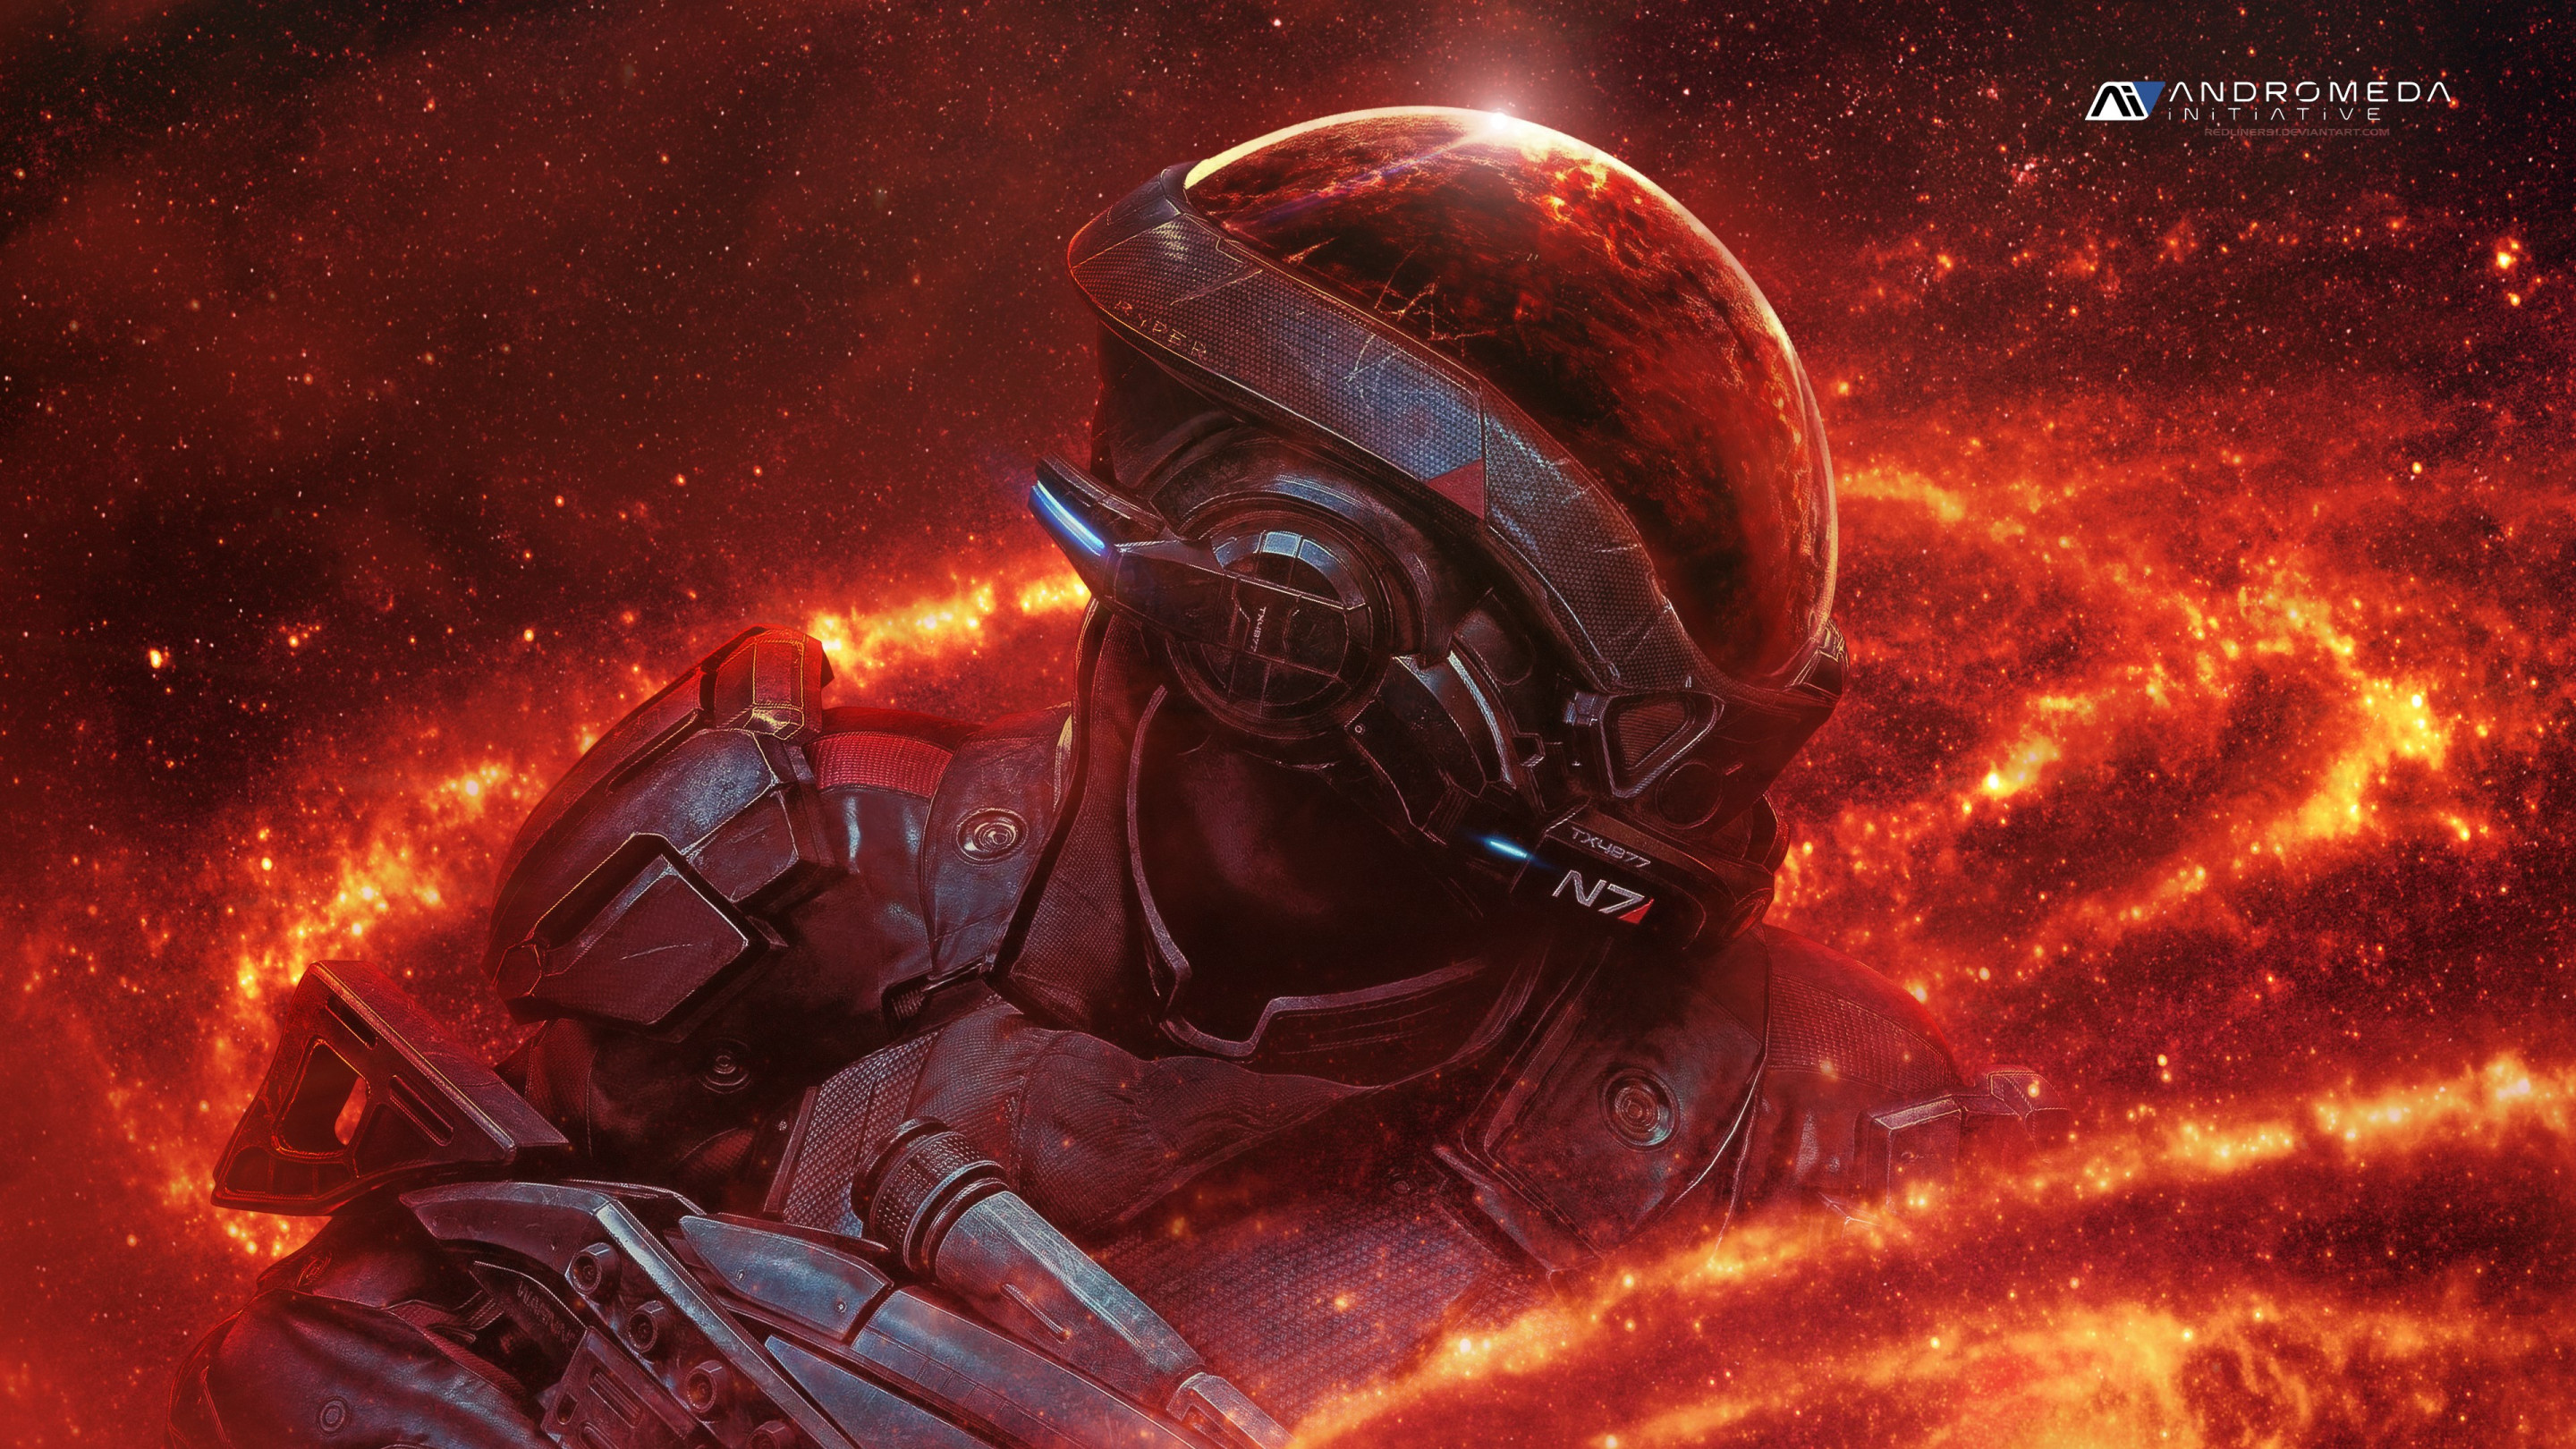 Mass Effect Andromeda N7 wallpaper 2880x1620